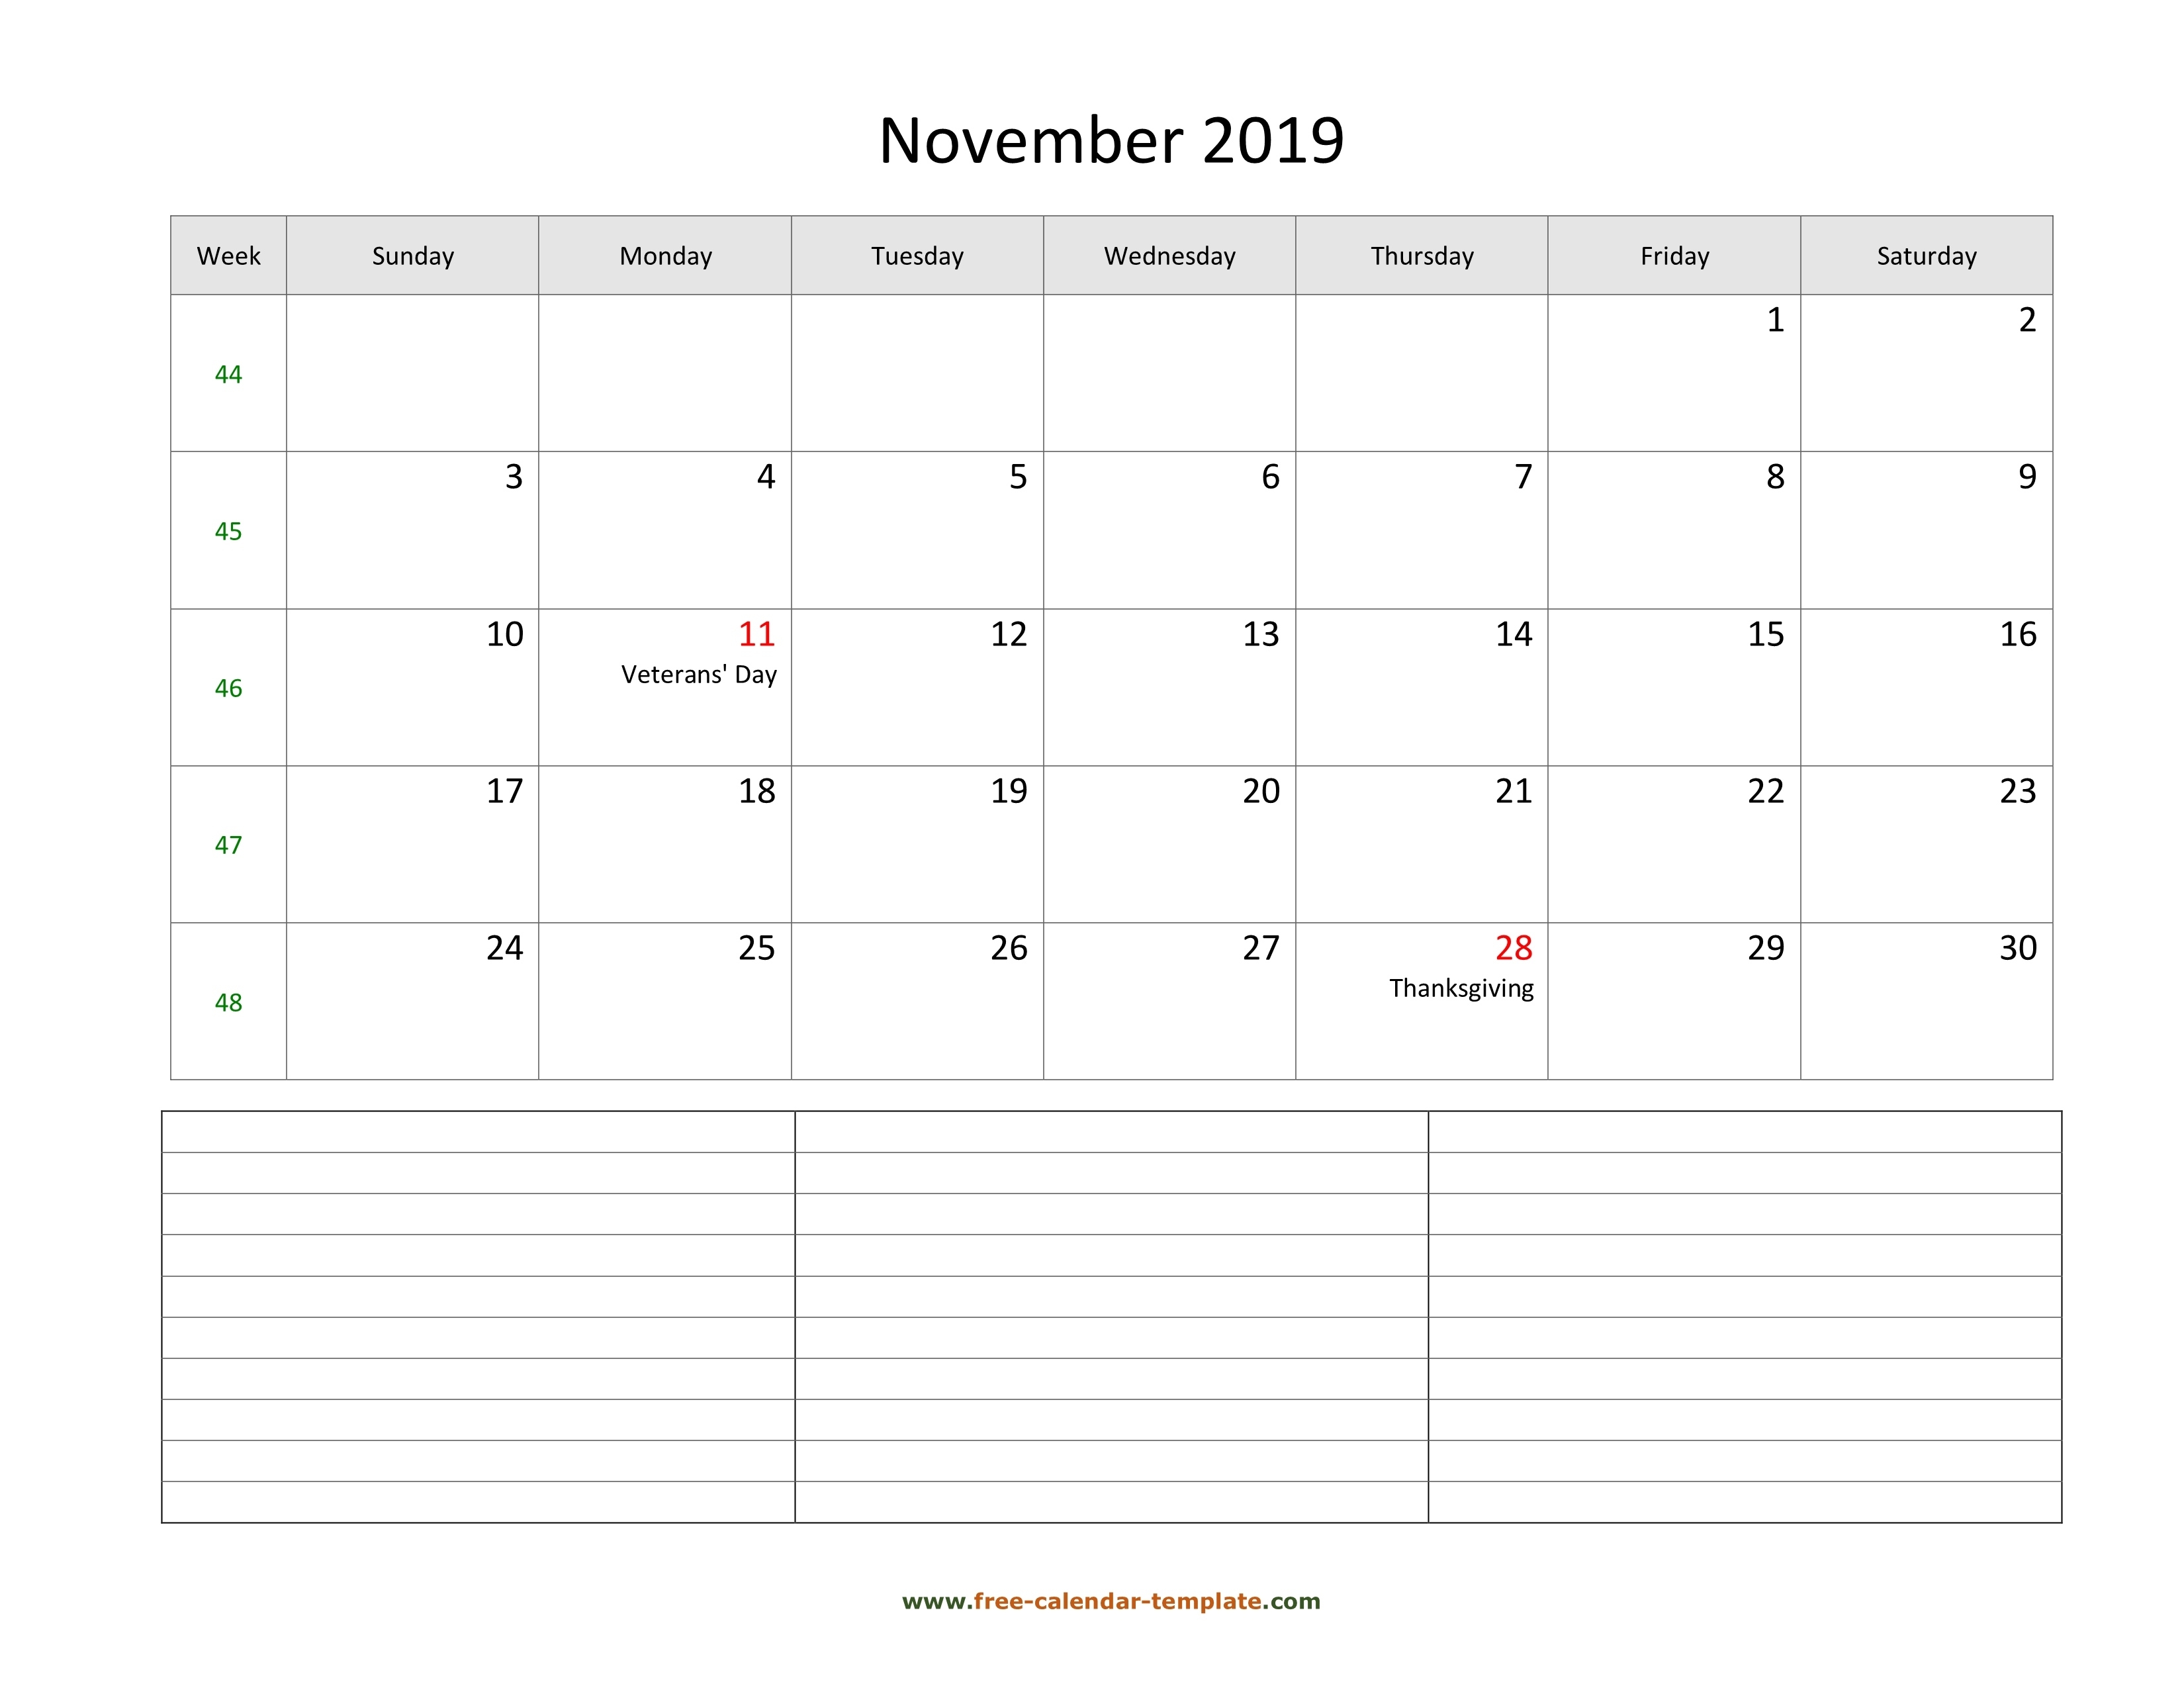 November 2019 Free Calendar Tempplate | Free-Calendar Calendar Template With Notes